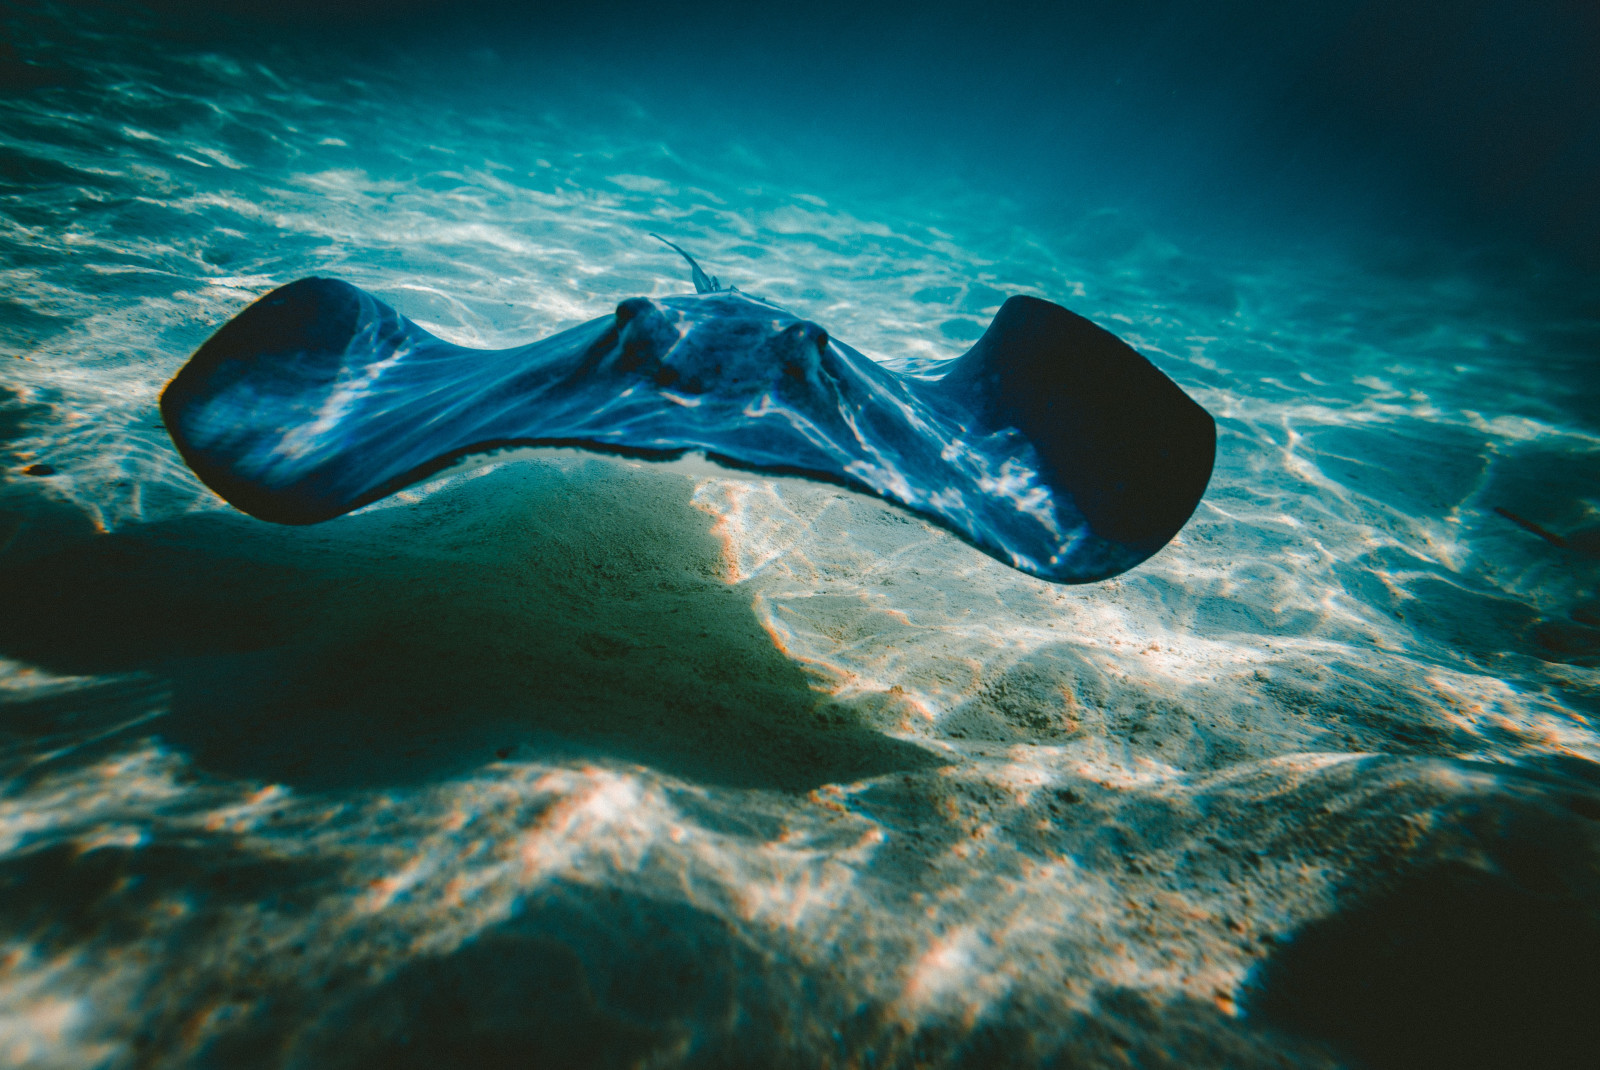 Stingray swimming under water in Exumas